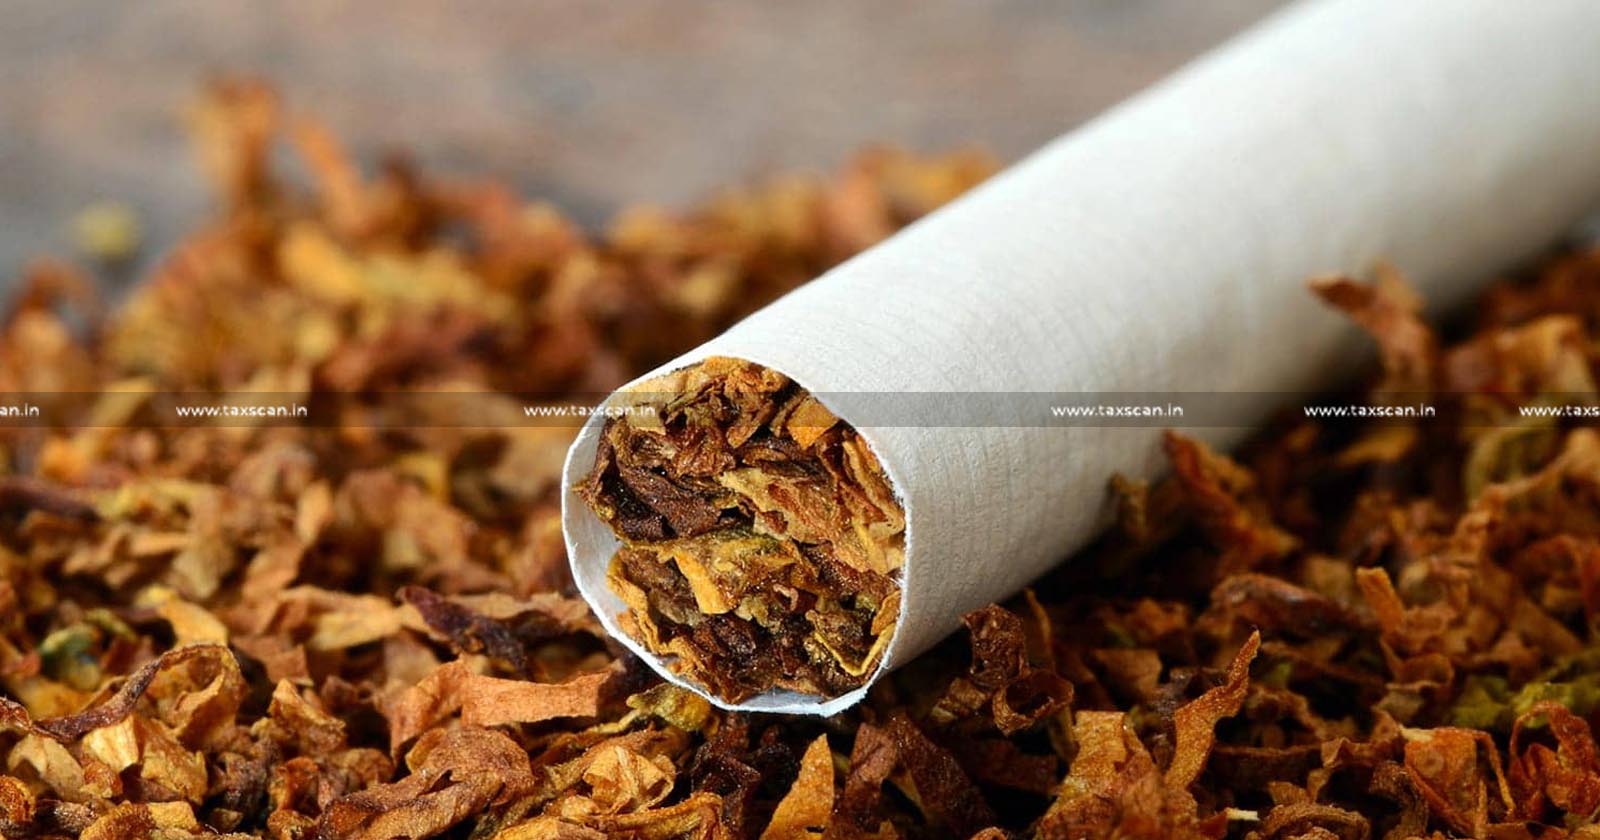 Kandi Ravo - Tobacco Waste - Brand Name - Labelling - Manufacture - Unmanufactured Tobacco Refuse - GST - taxscan